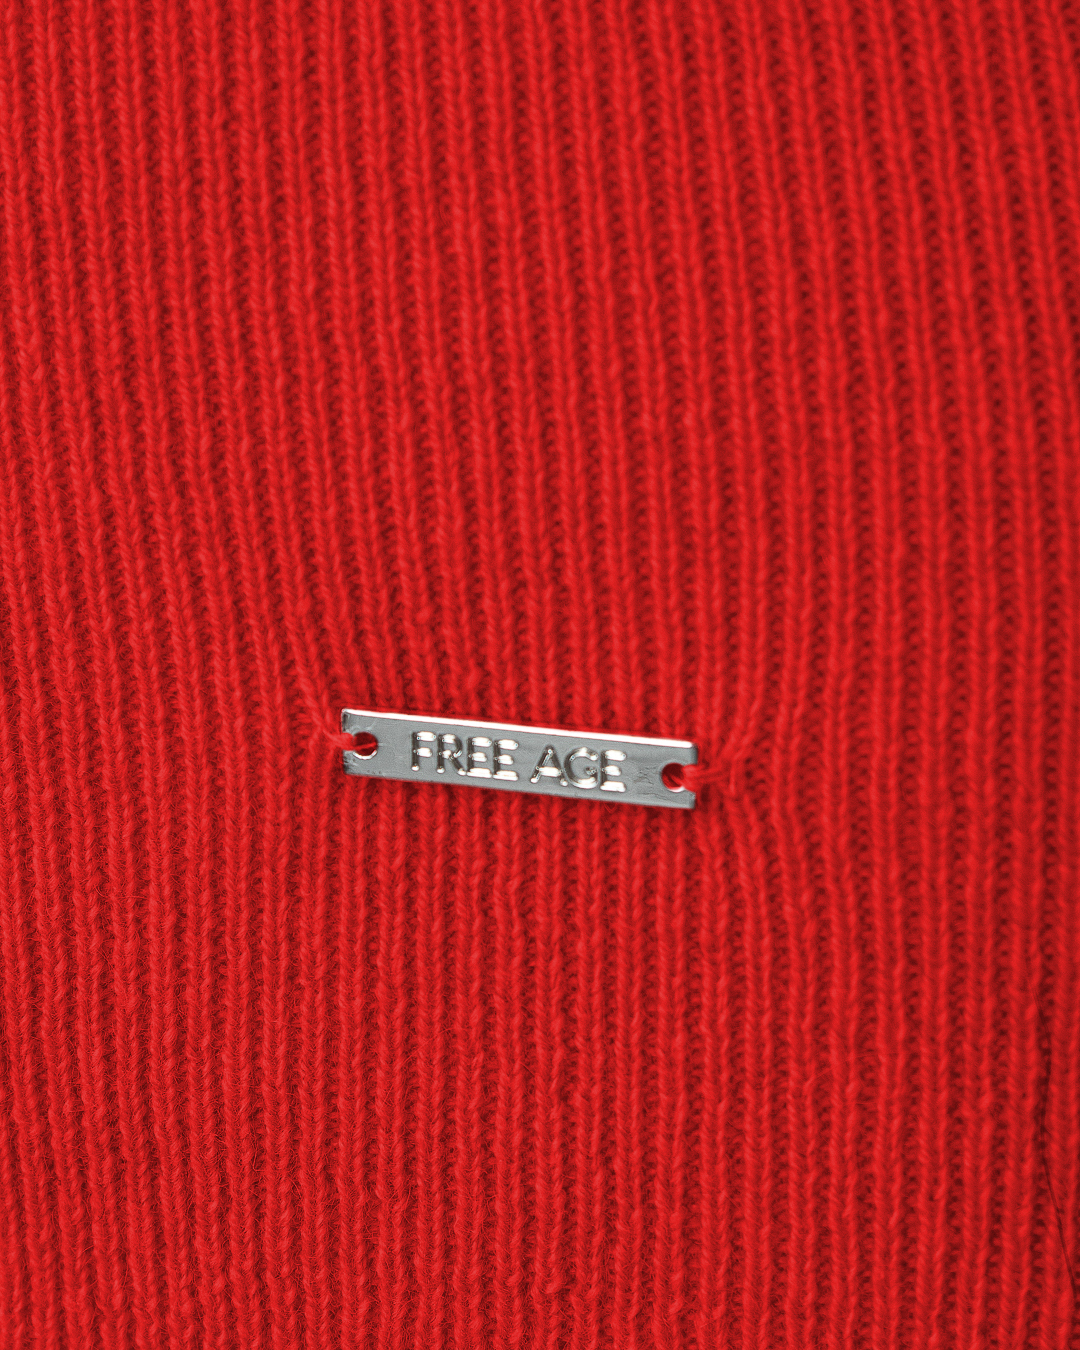 джемпер FREE AGE. FW20082-R красный xl, размер xl - фото 2